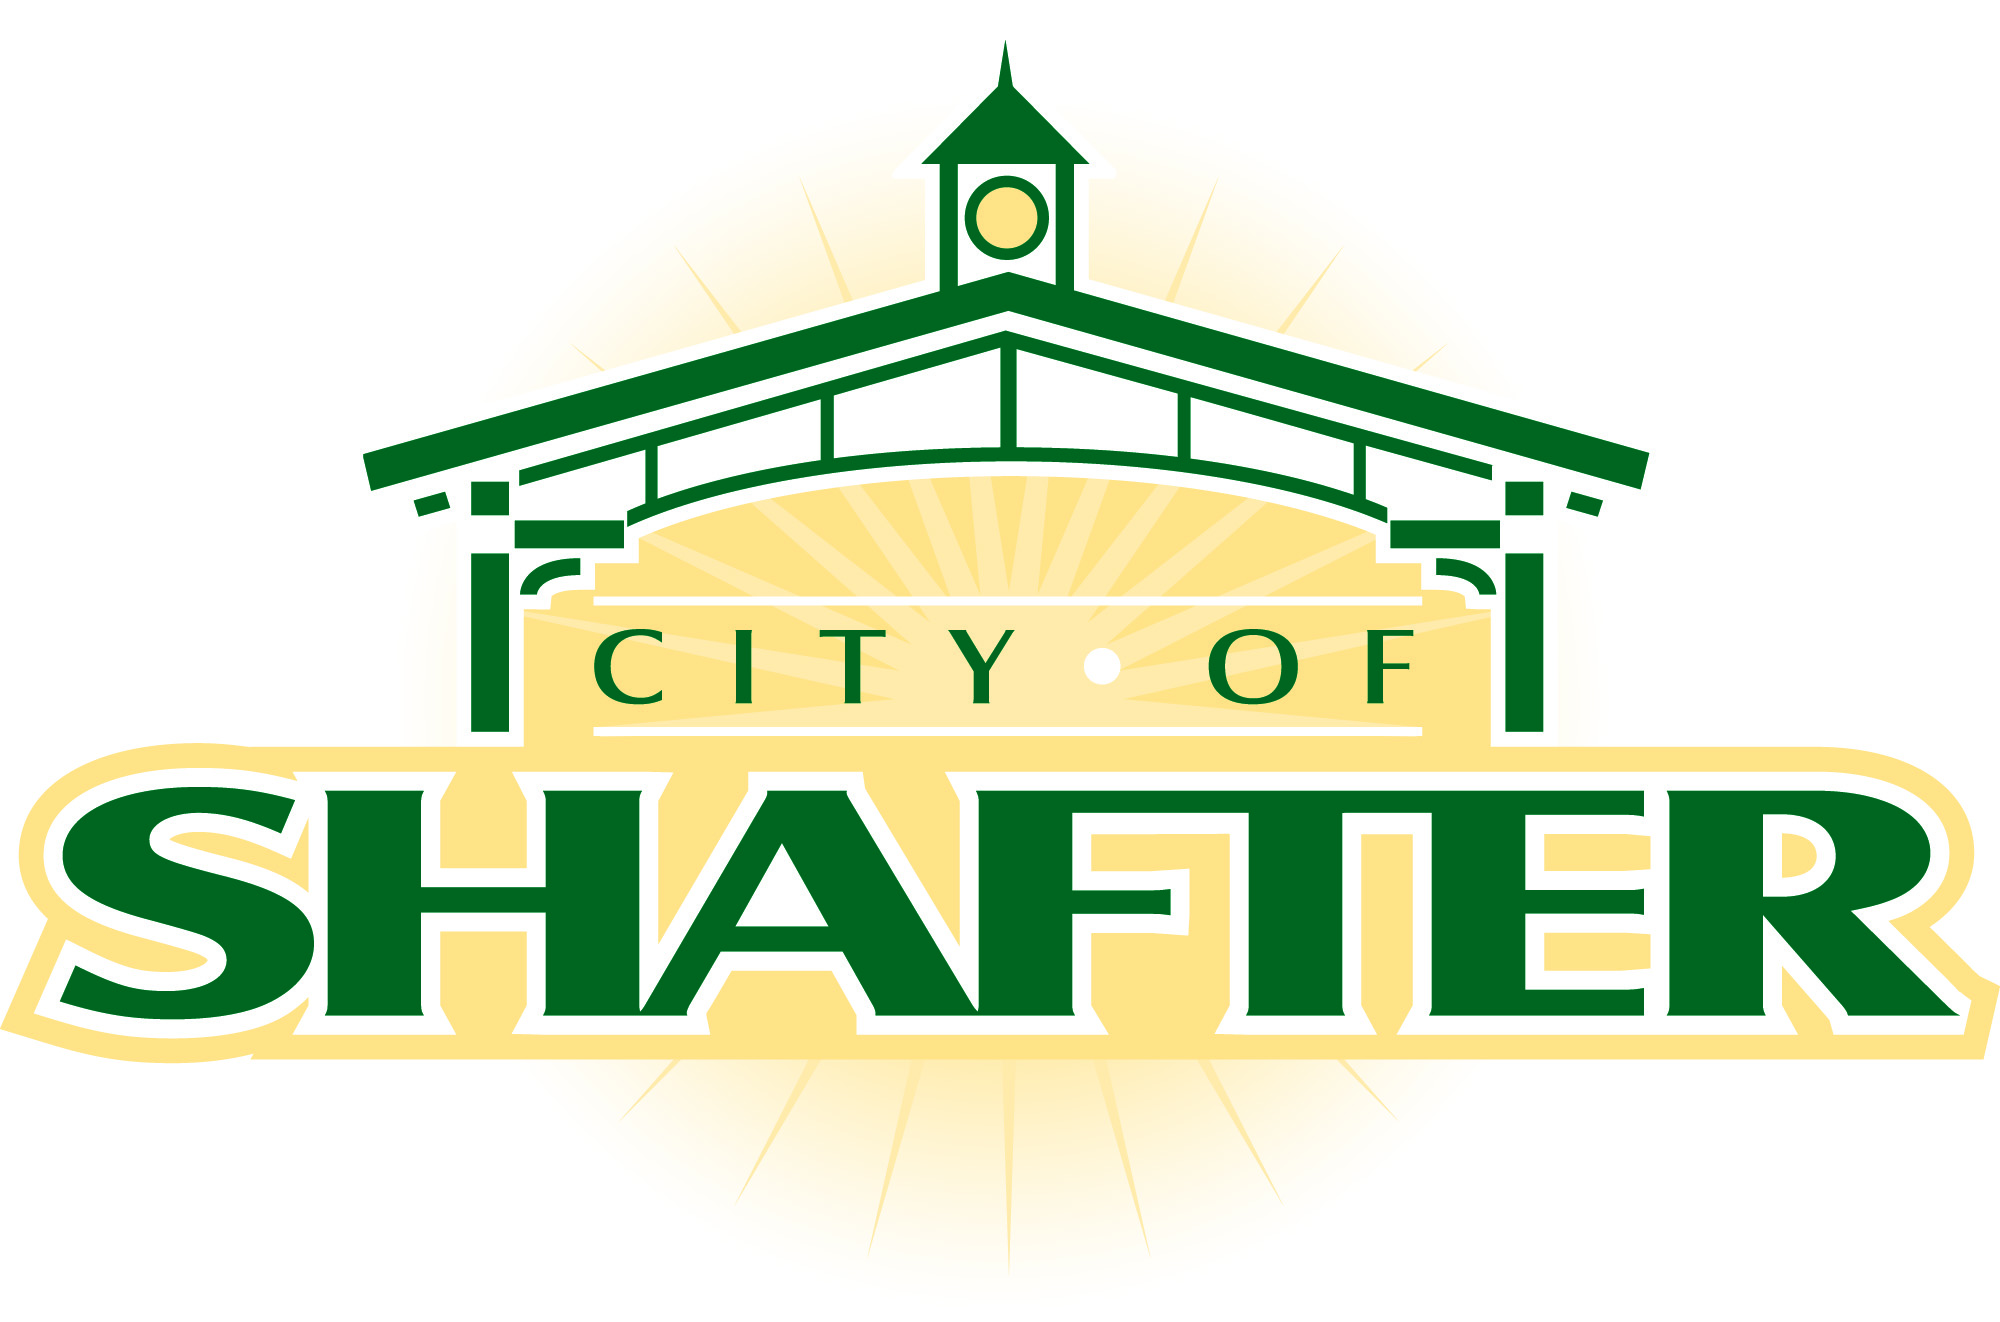 Organization logo of City of Shafter